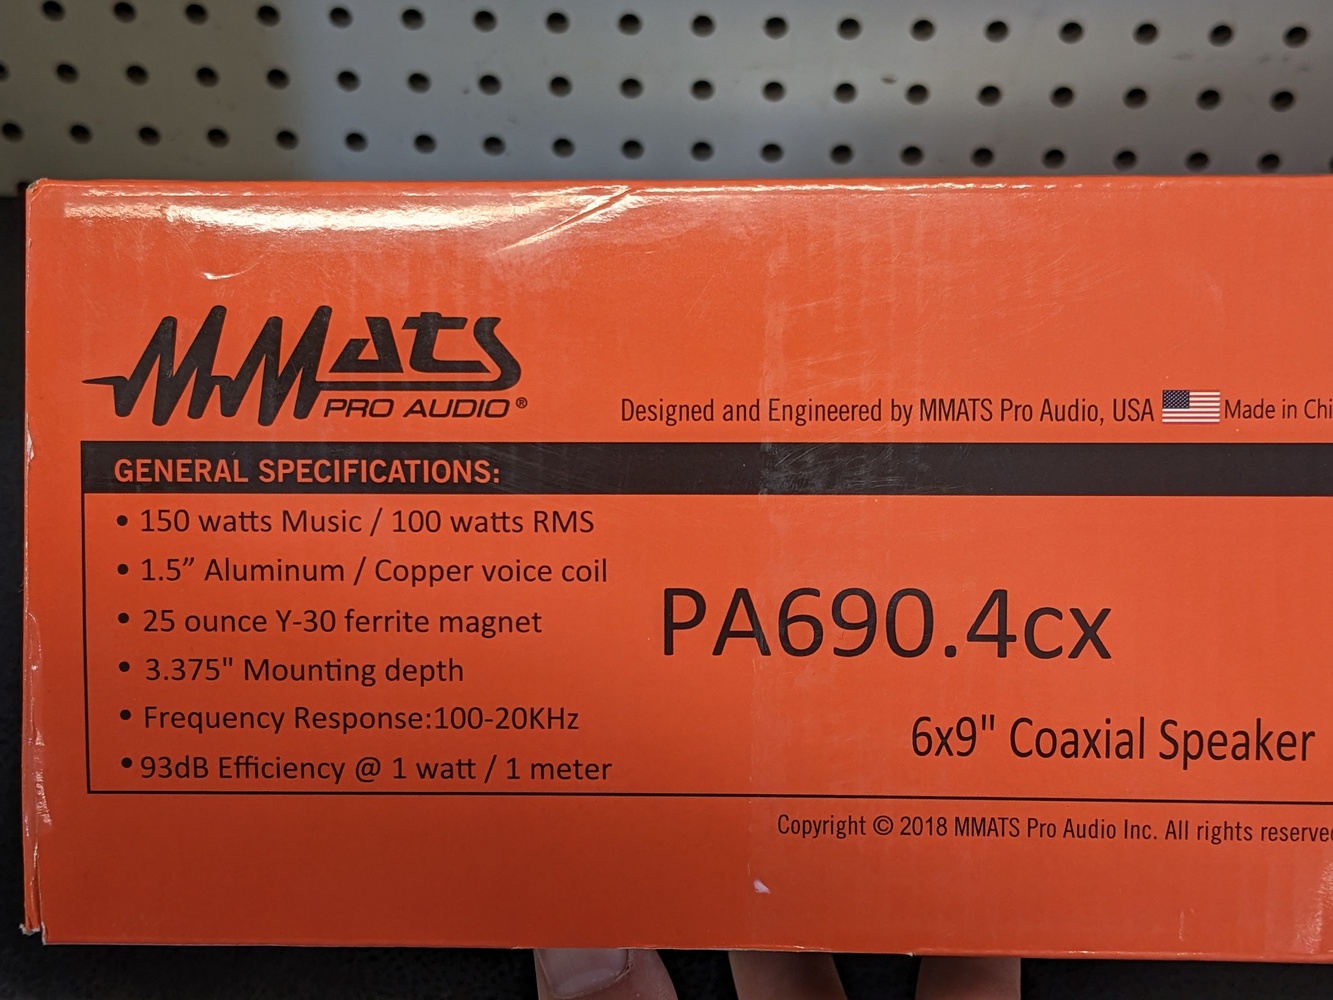 mmats pa690.4cx 6x9 coaxial speaker